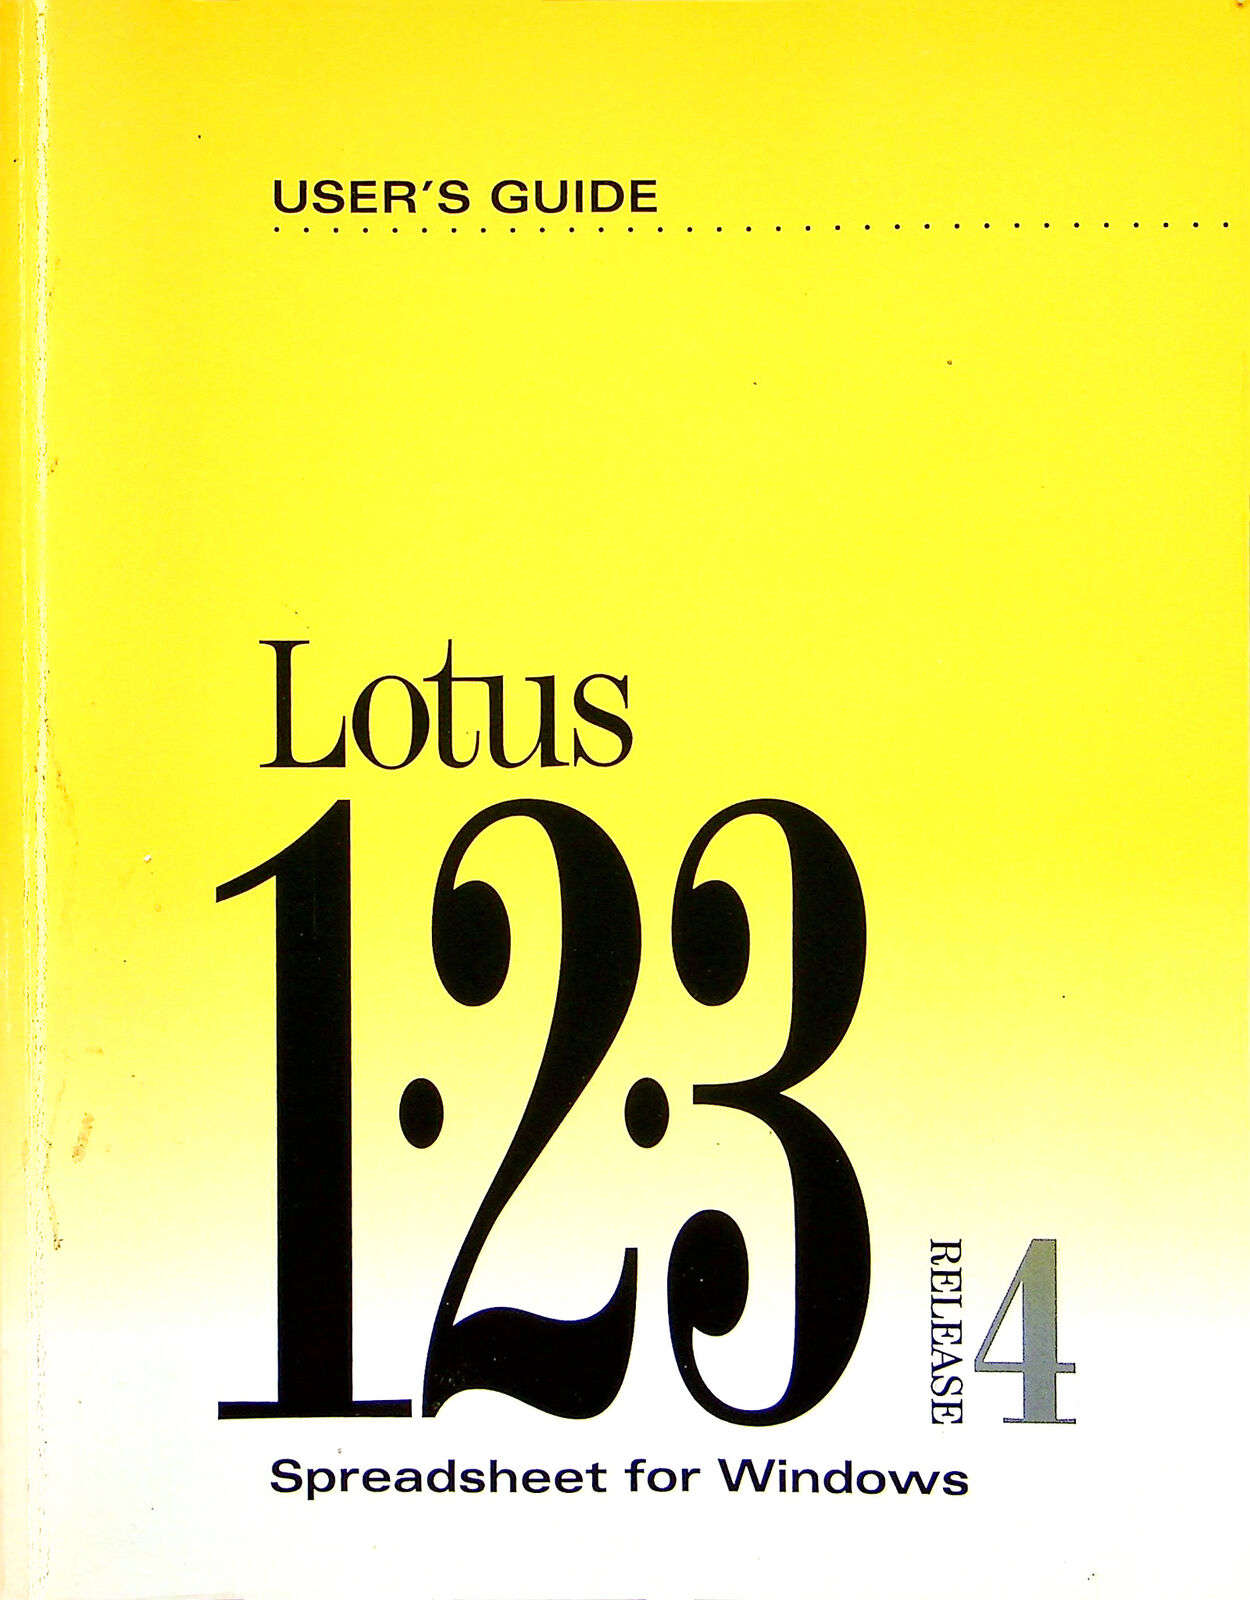 Lotus 123 Release 4 User's Guide Windows 3.1 1993